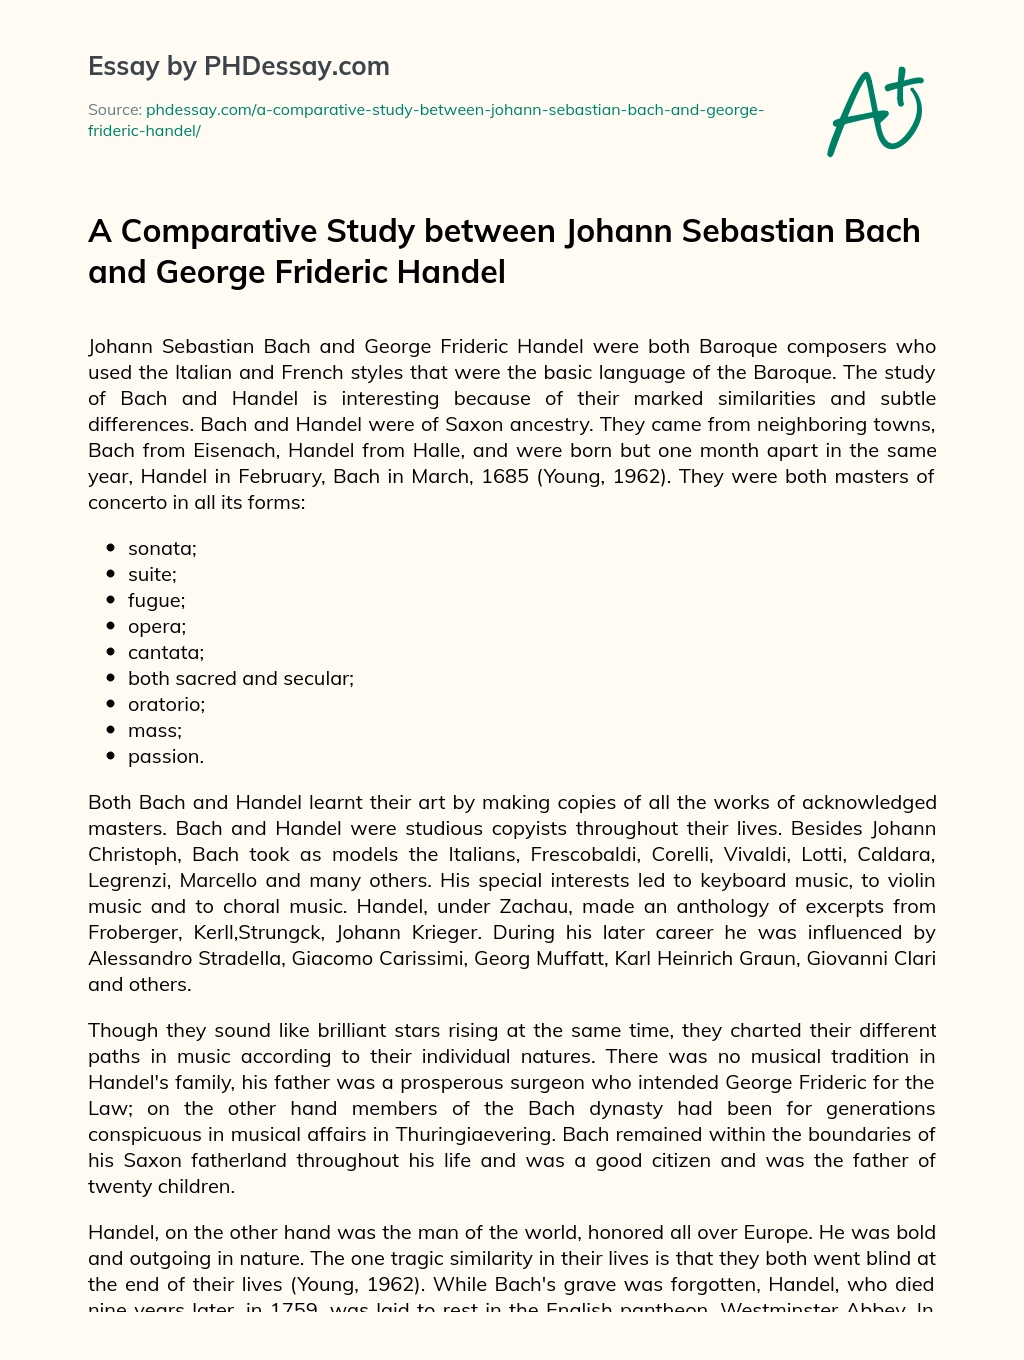 A Comparative Study between Johann Sebastian Bach and George Frideric Handel essay